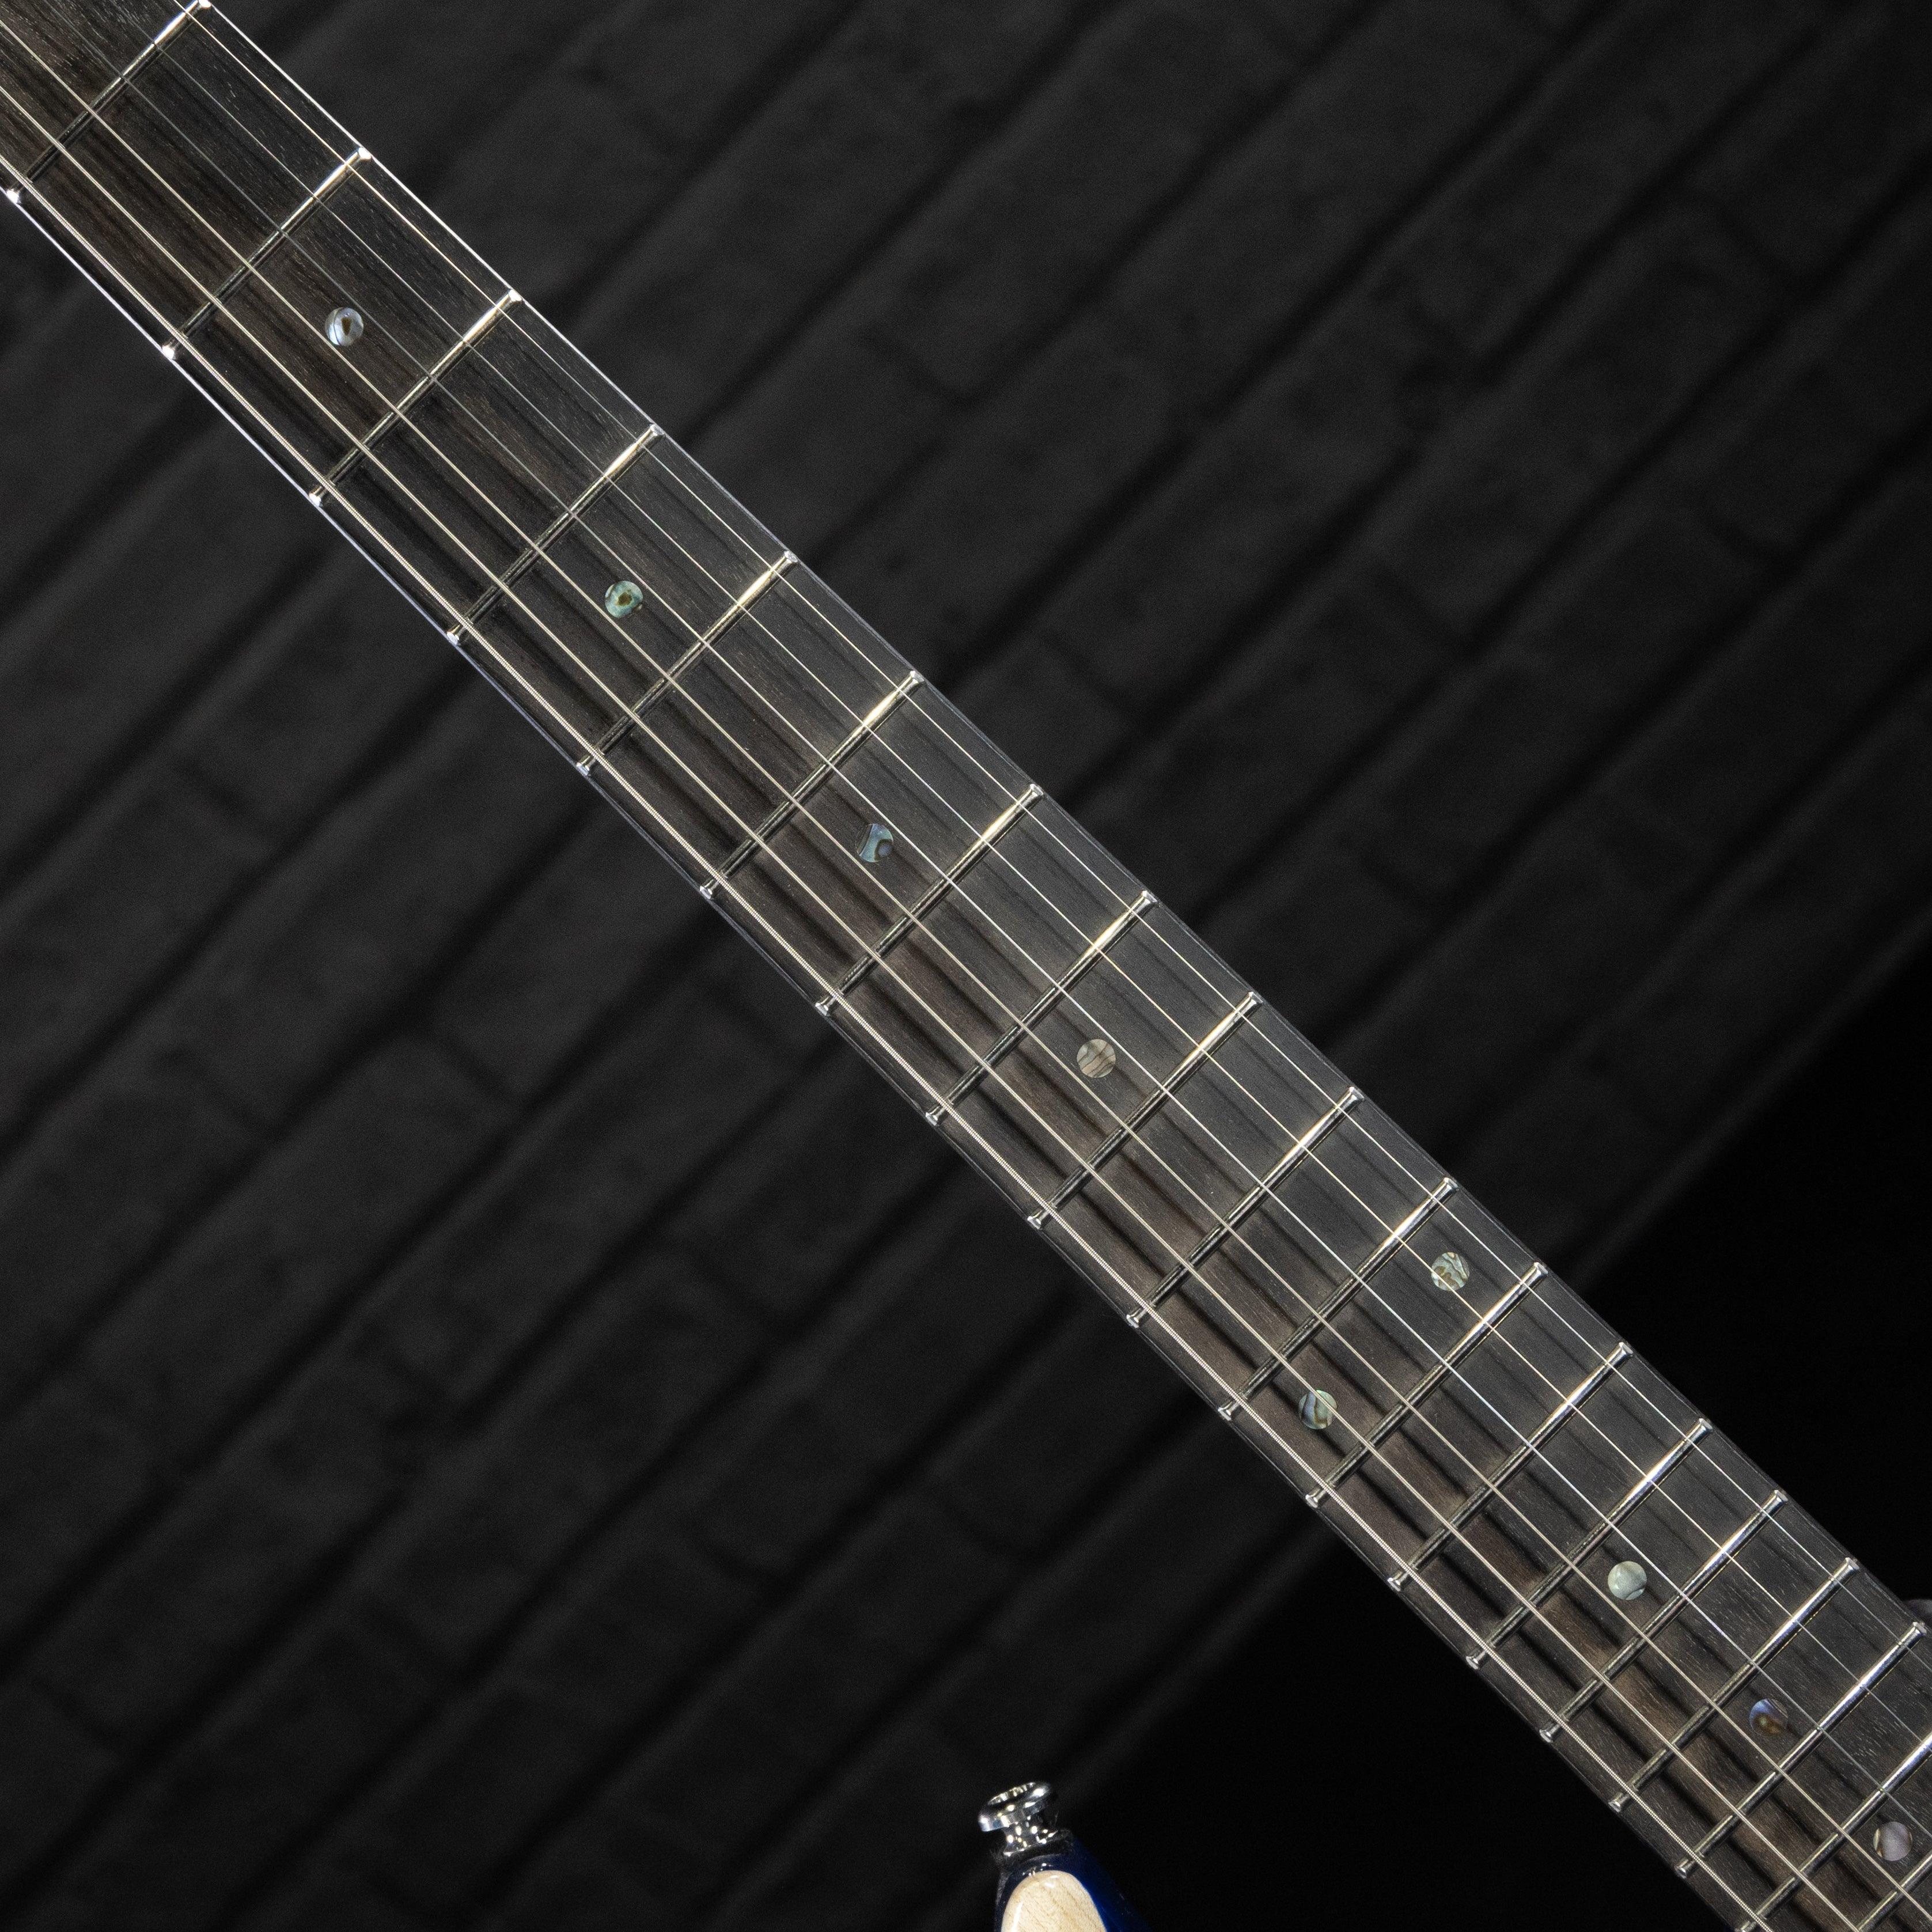 Cort X700 Duality Electric Guitar (Light Blue Burst) - Impulse Music Co.